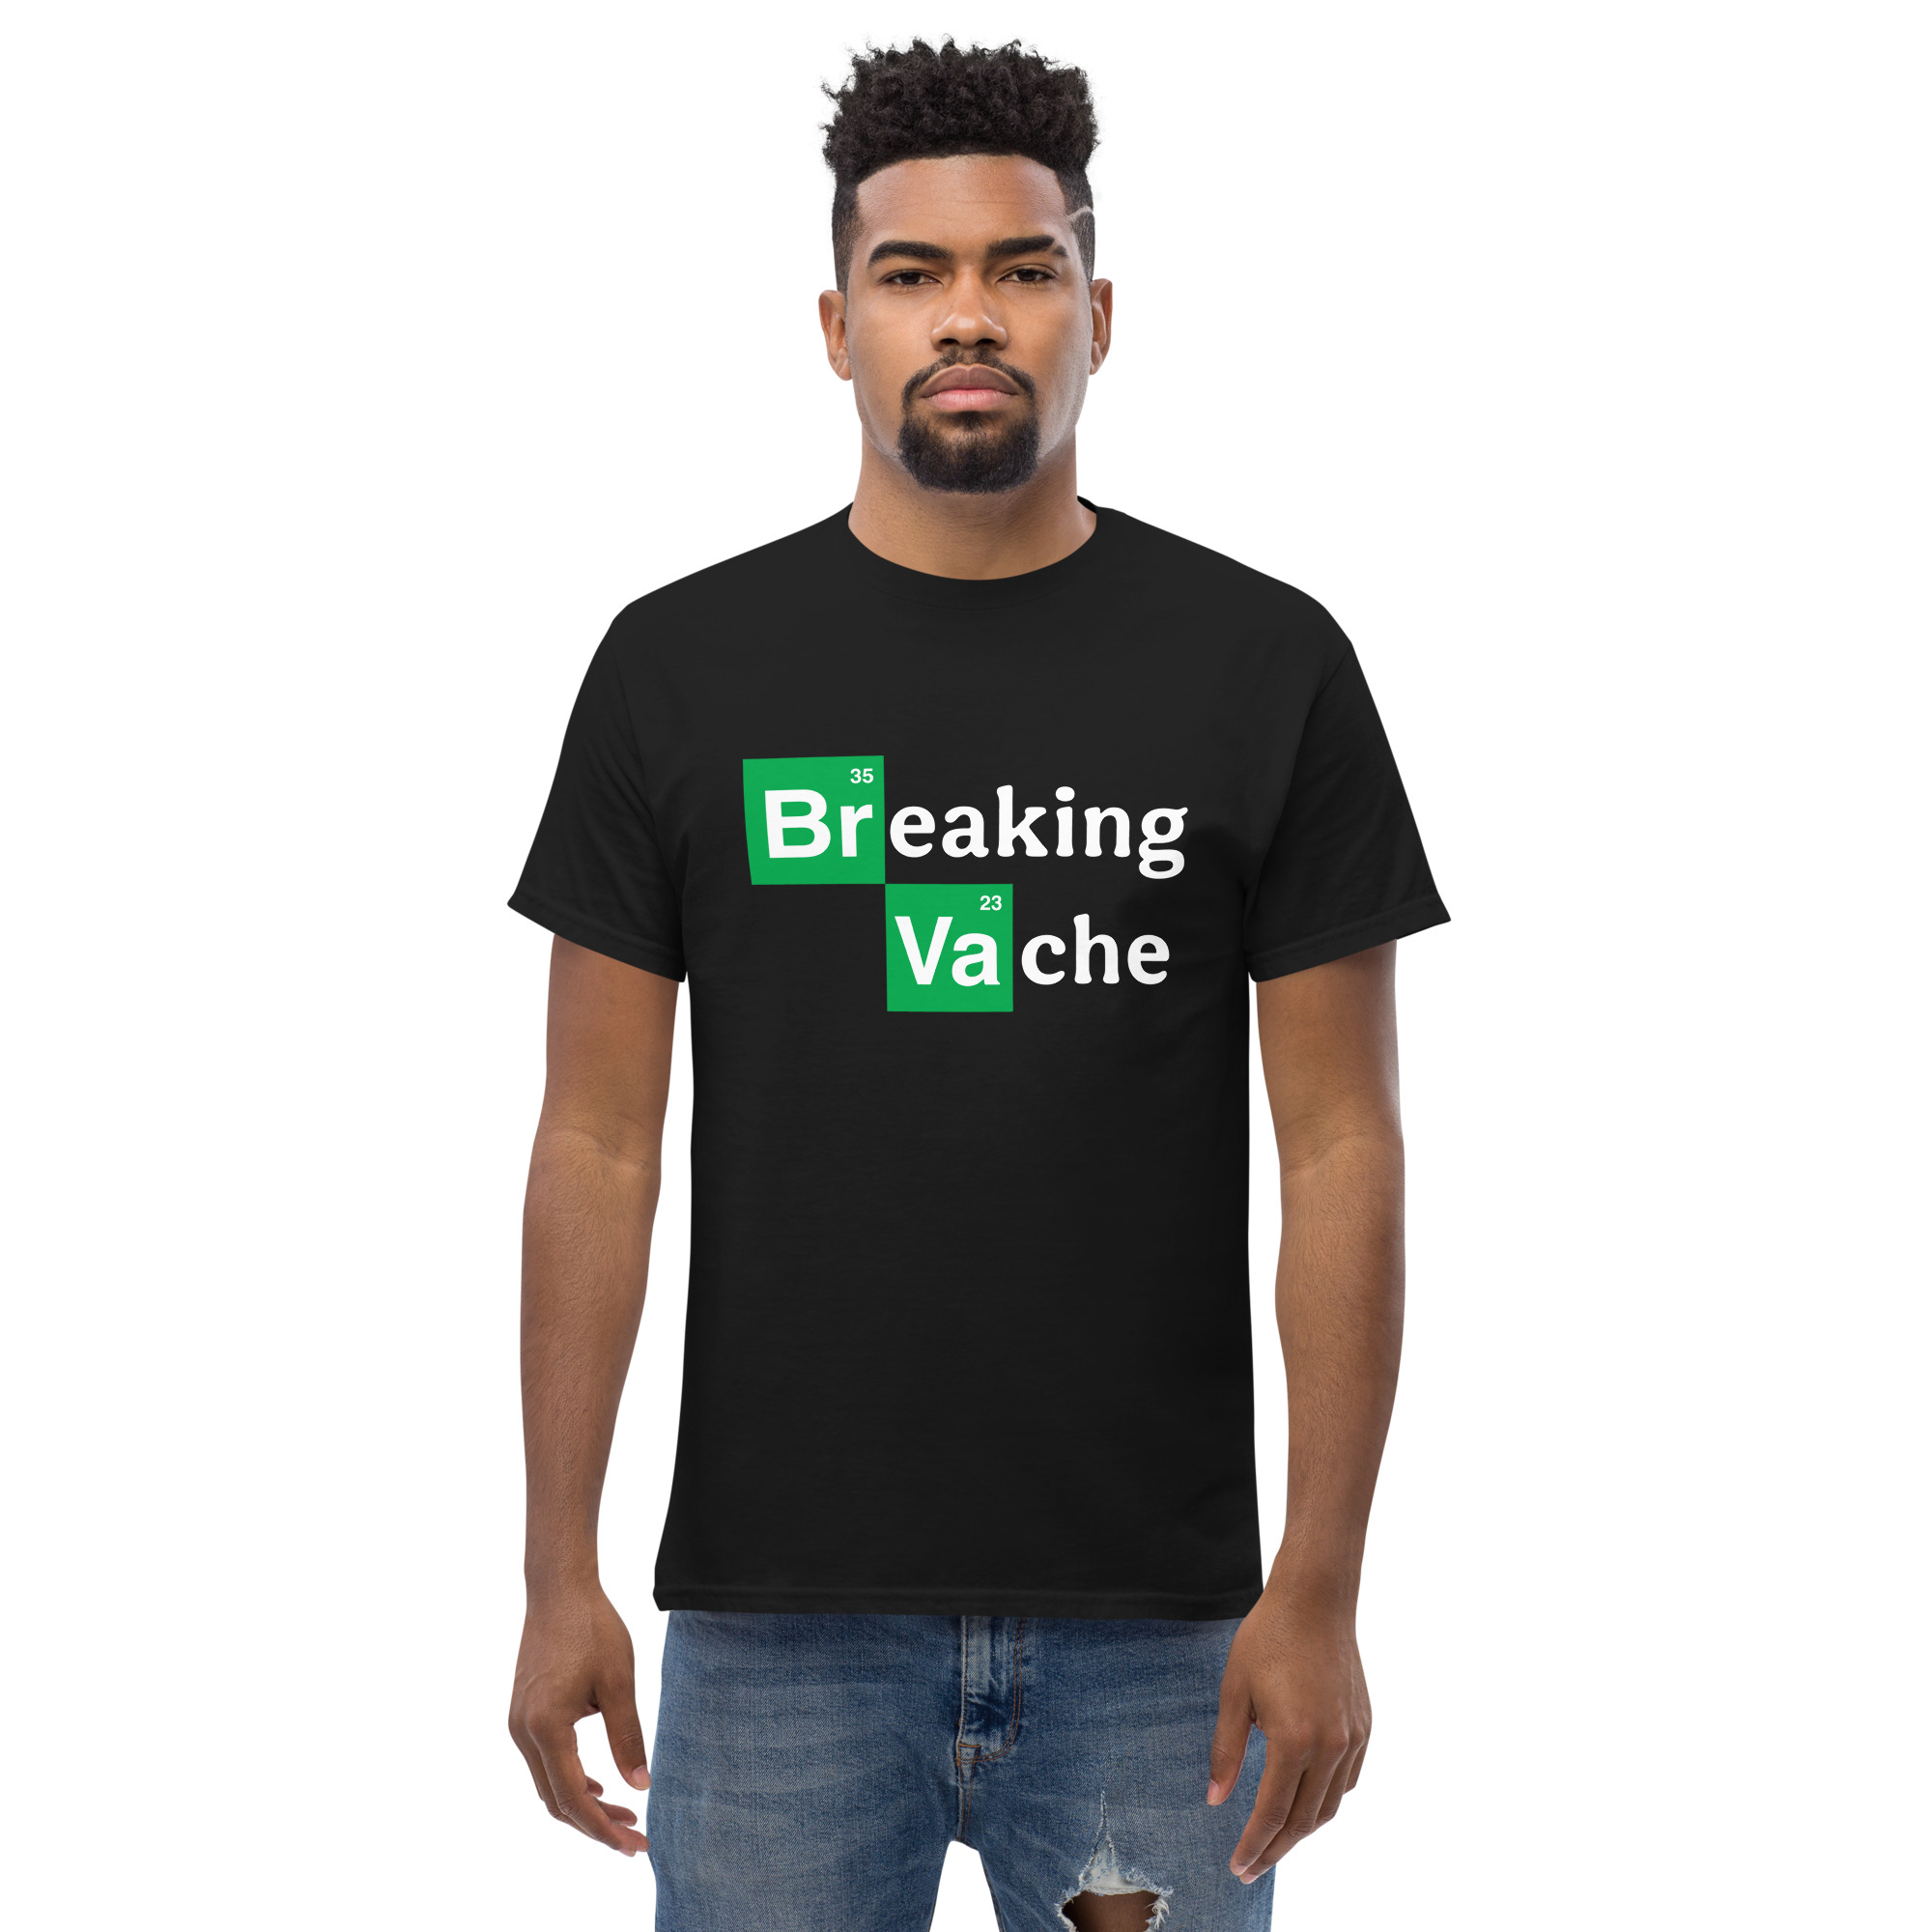 T-shirt – Les Vaudois – Breaking Vache T-Shirts Wearyt